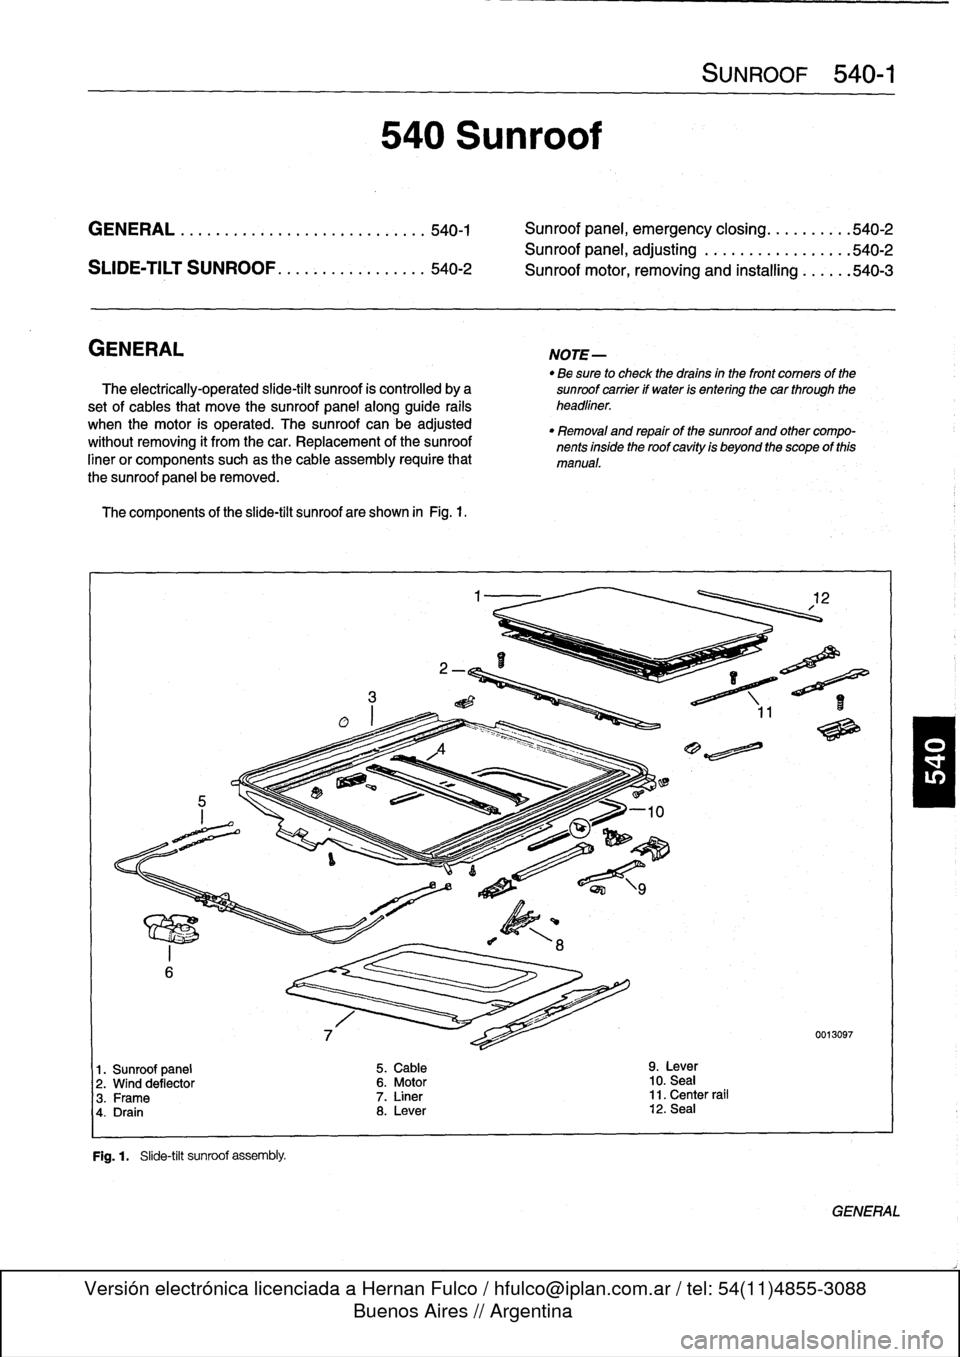 BMW 328i 1997 E36 Workshop Manual 
GENERAL
...
.
.
.
.
.
................
.
.
.
.
540-1

	

Sunroof
panel,
emergency
closing
.......
.
.
.540-2

Sunroof
panel,
adjusting
..
.
...........
.
.
.540-2

SUDE-TILT
SUNROOF
.
.
.
.
.
.
.
.
.